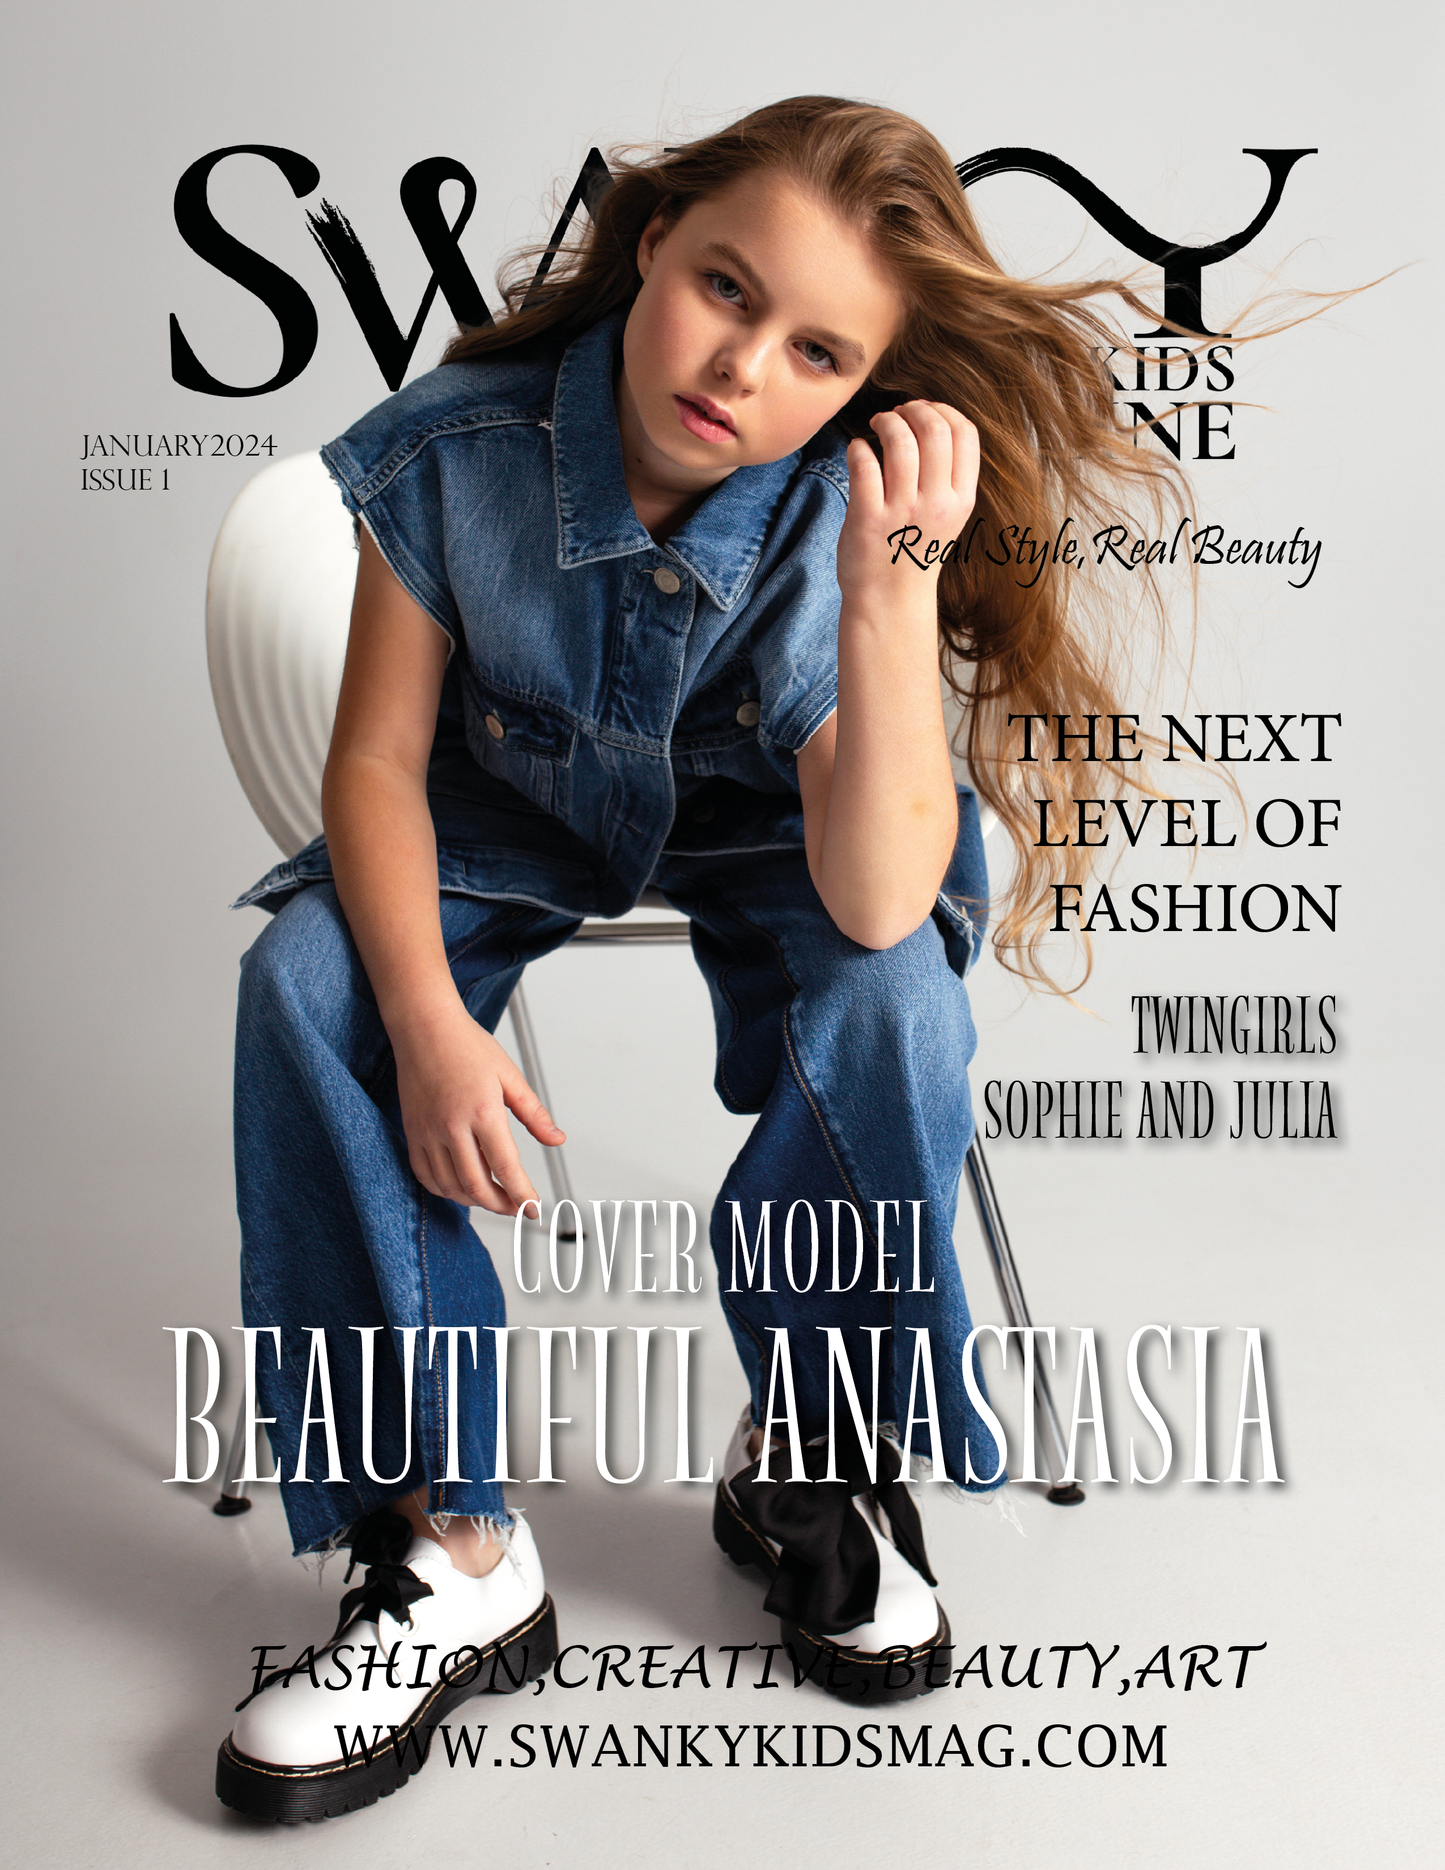 Swanky Kids Magazine - January 2024: The Kids & Teens Edition Issue 1